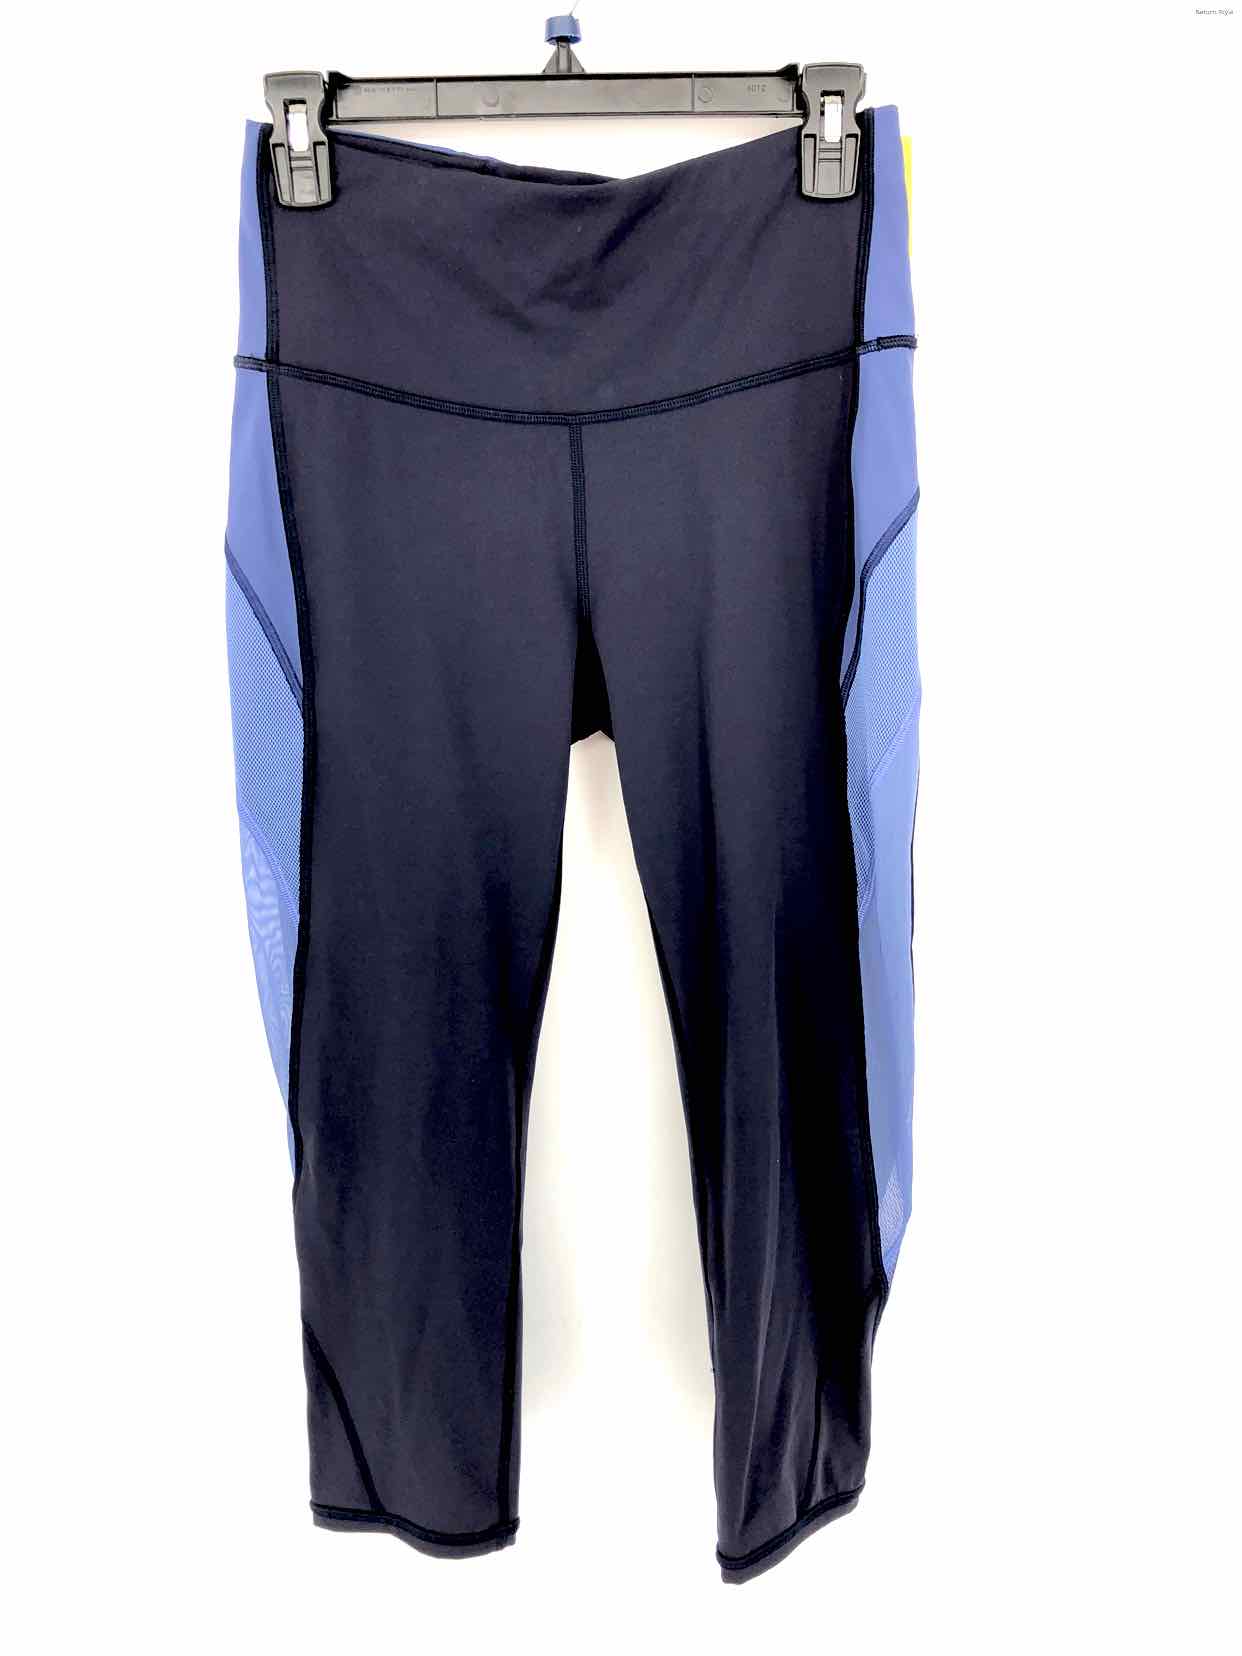 LULULEMON Navy Blue Mesh Trim Legging Size 8 (M) Activewear